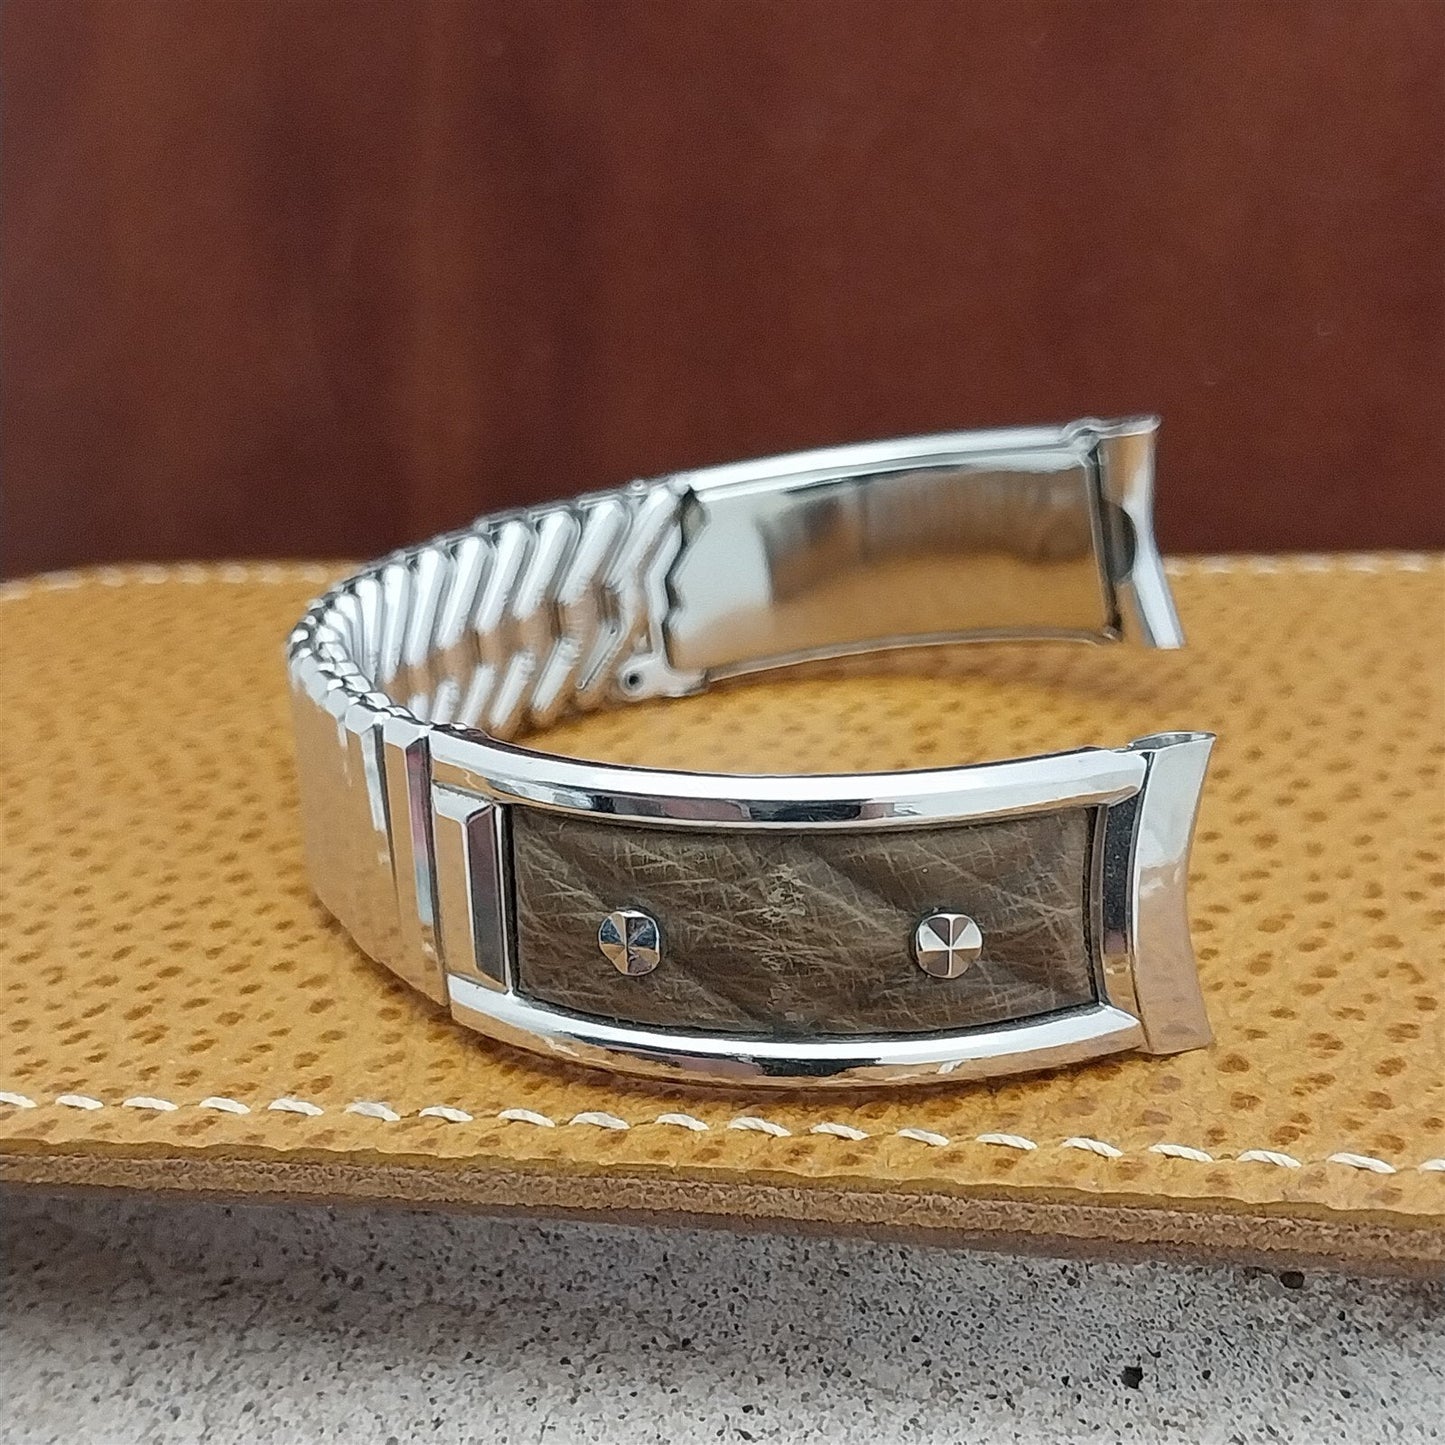 5/8" Kreisler USA White Gold-Filled & Leather nos 1950s Vintage Watch Band